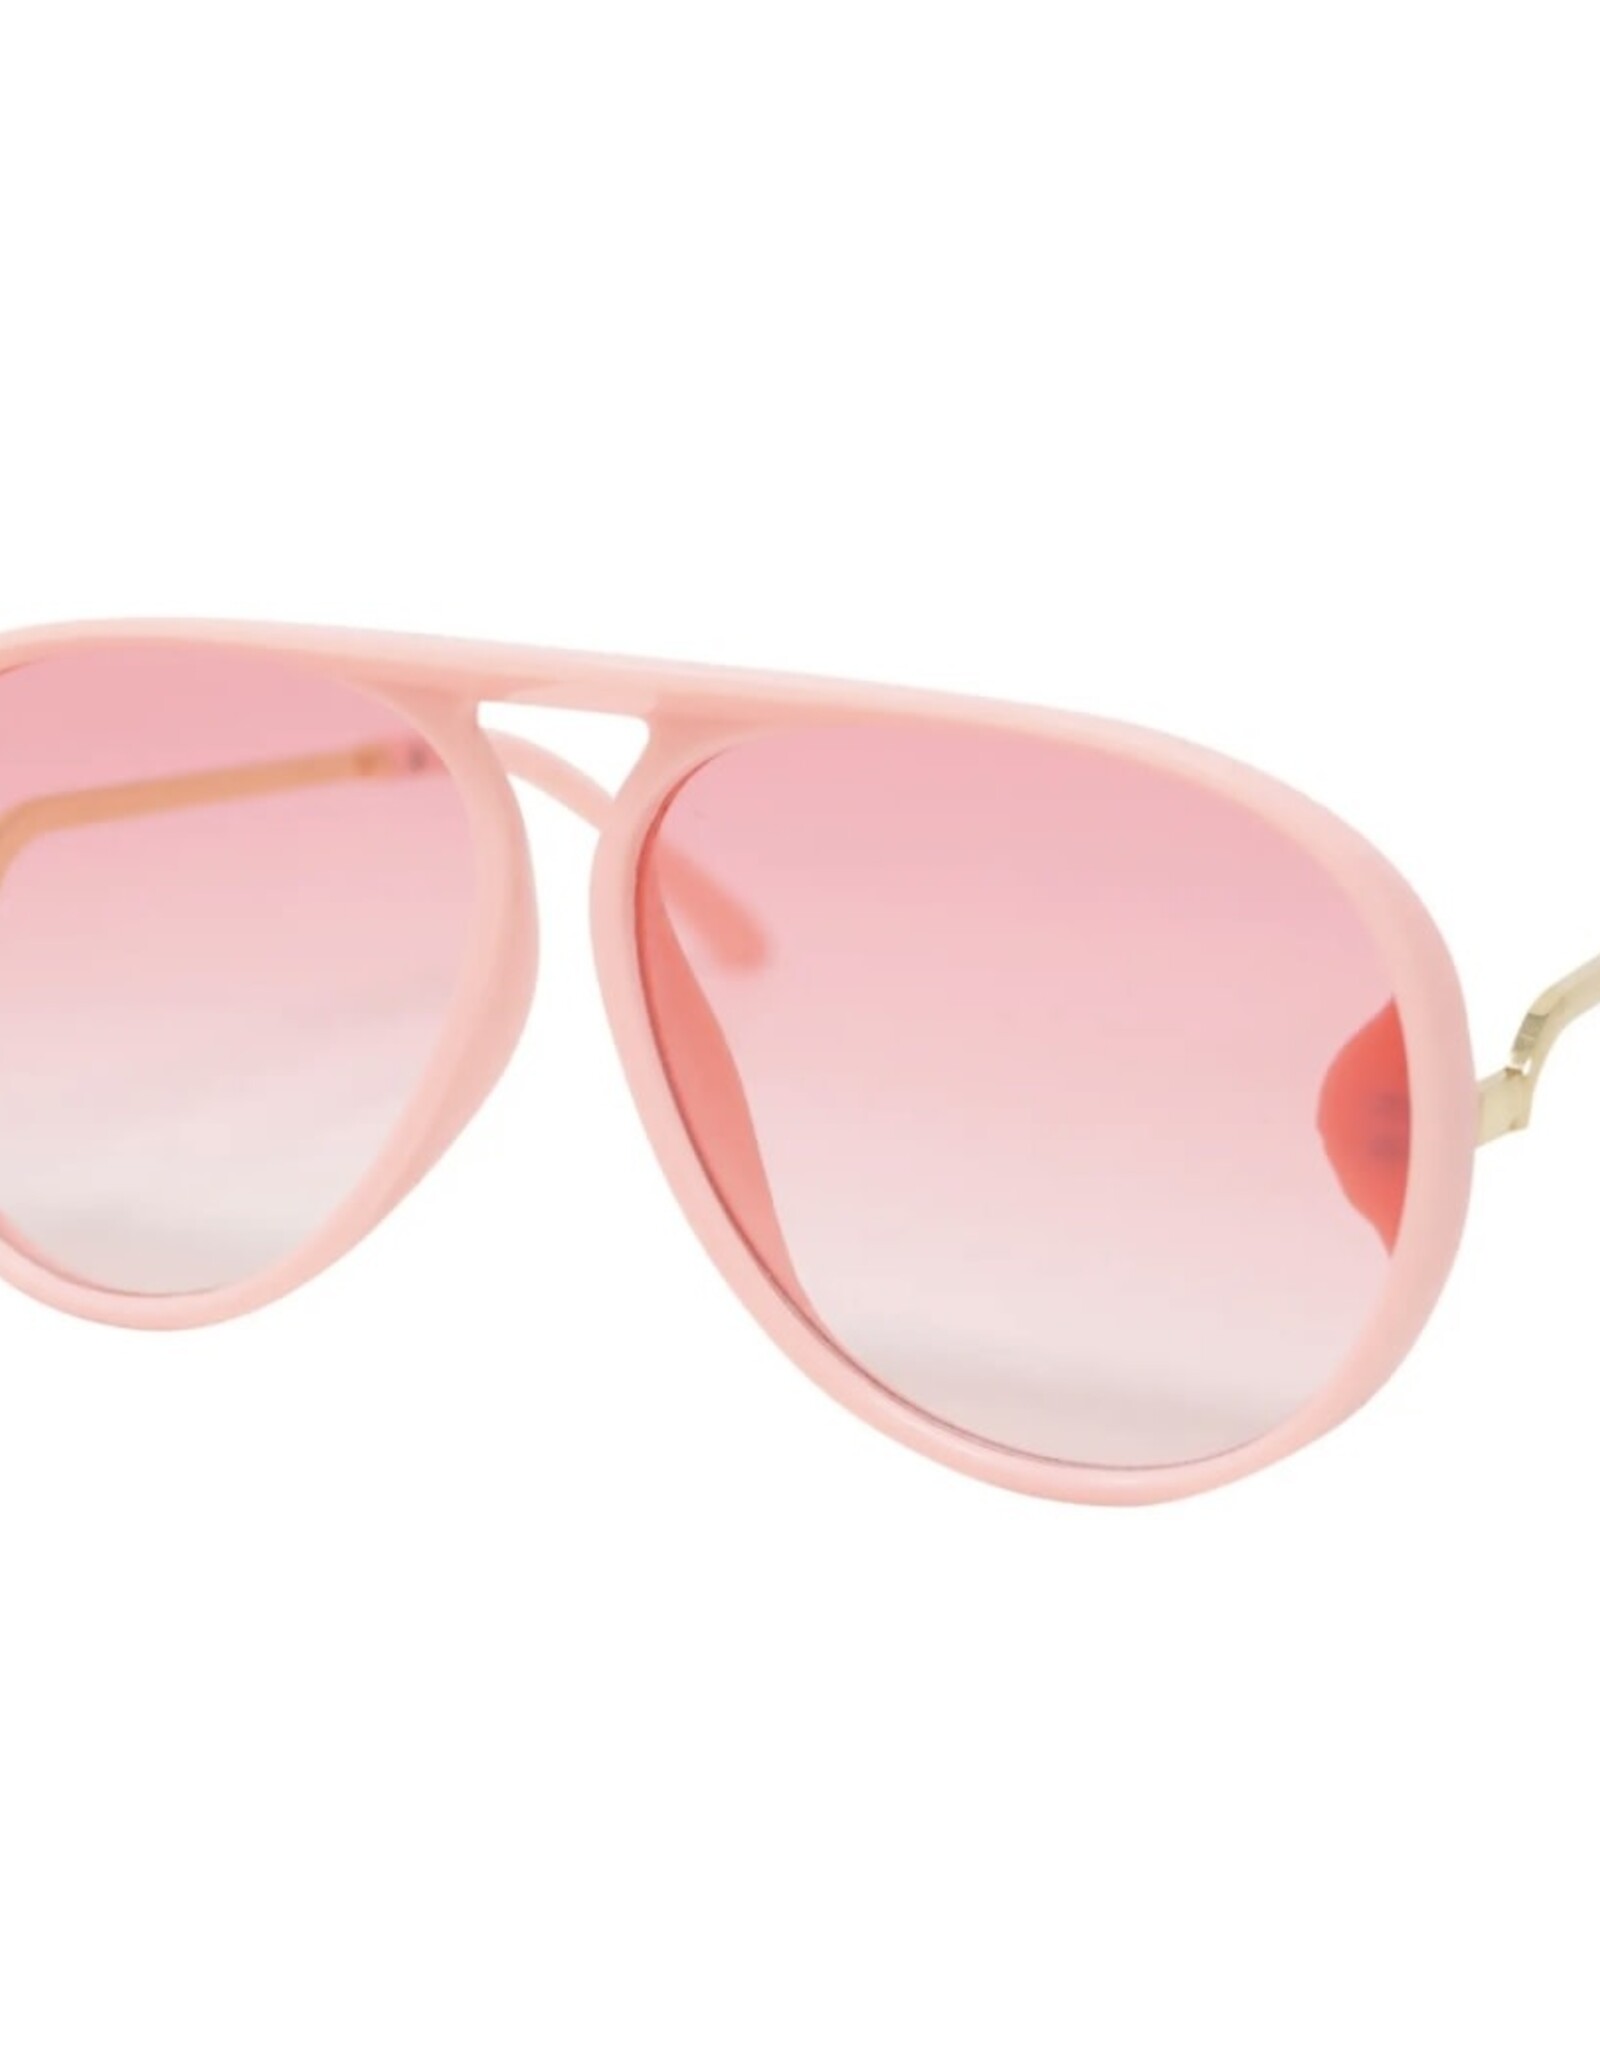 Elisian Pink Tinted Aviator Sunglasses S23B1585 @ ₹999